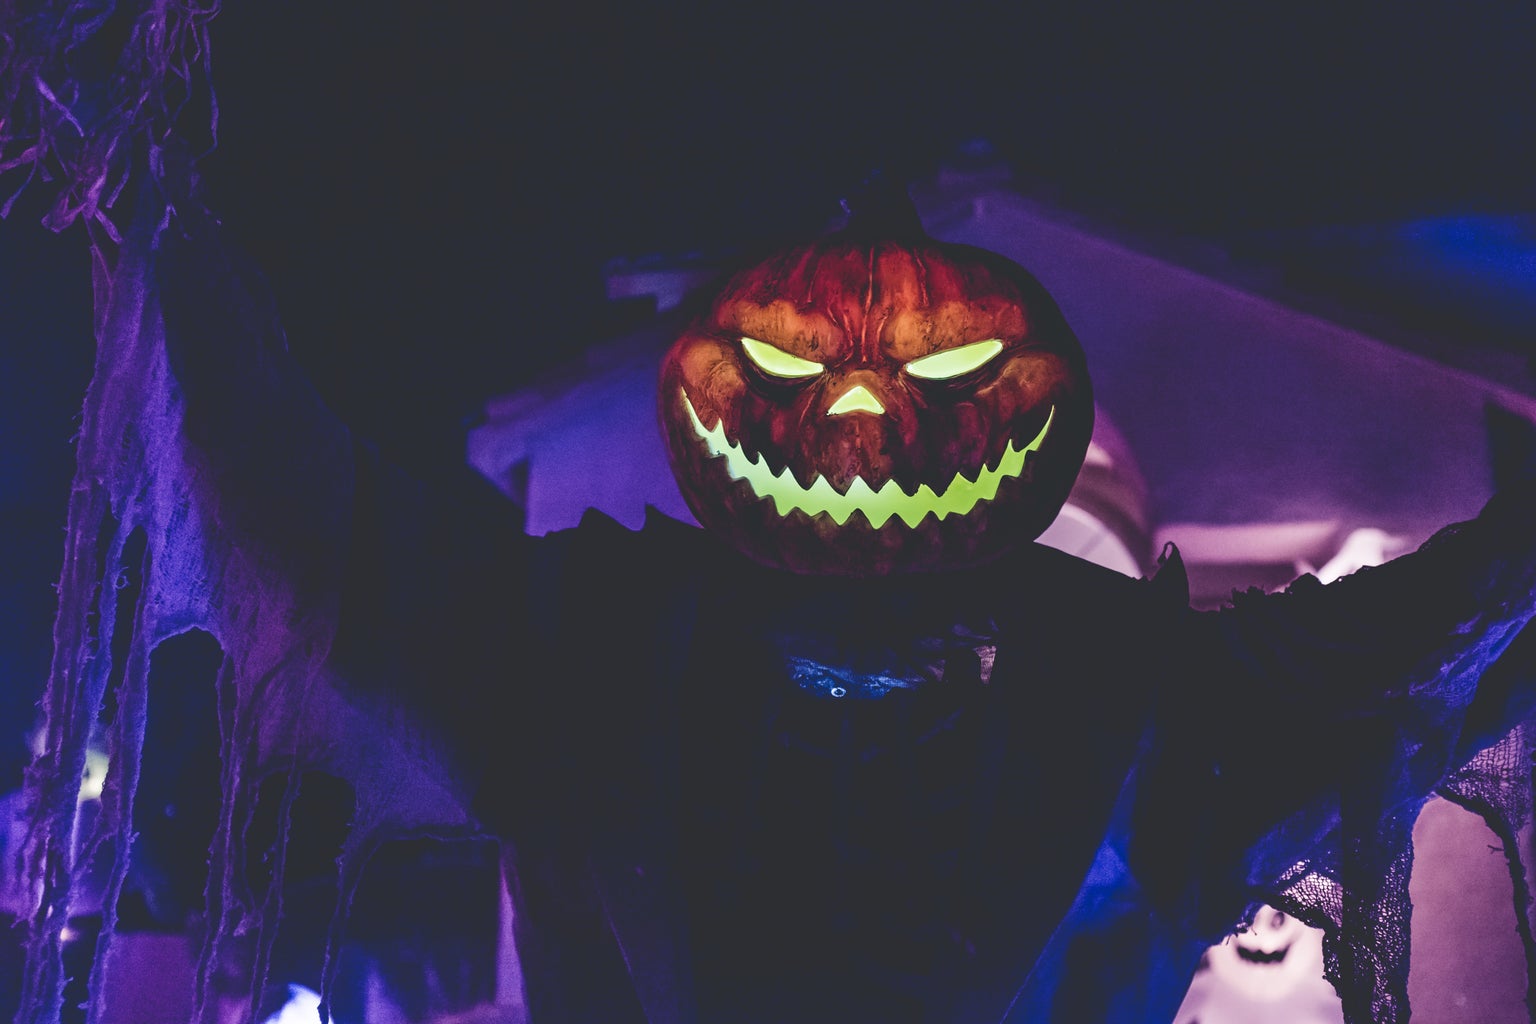 Creepy pumpkin headed creature in a Halloween setting